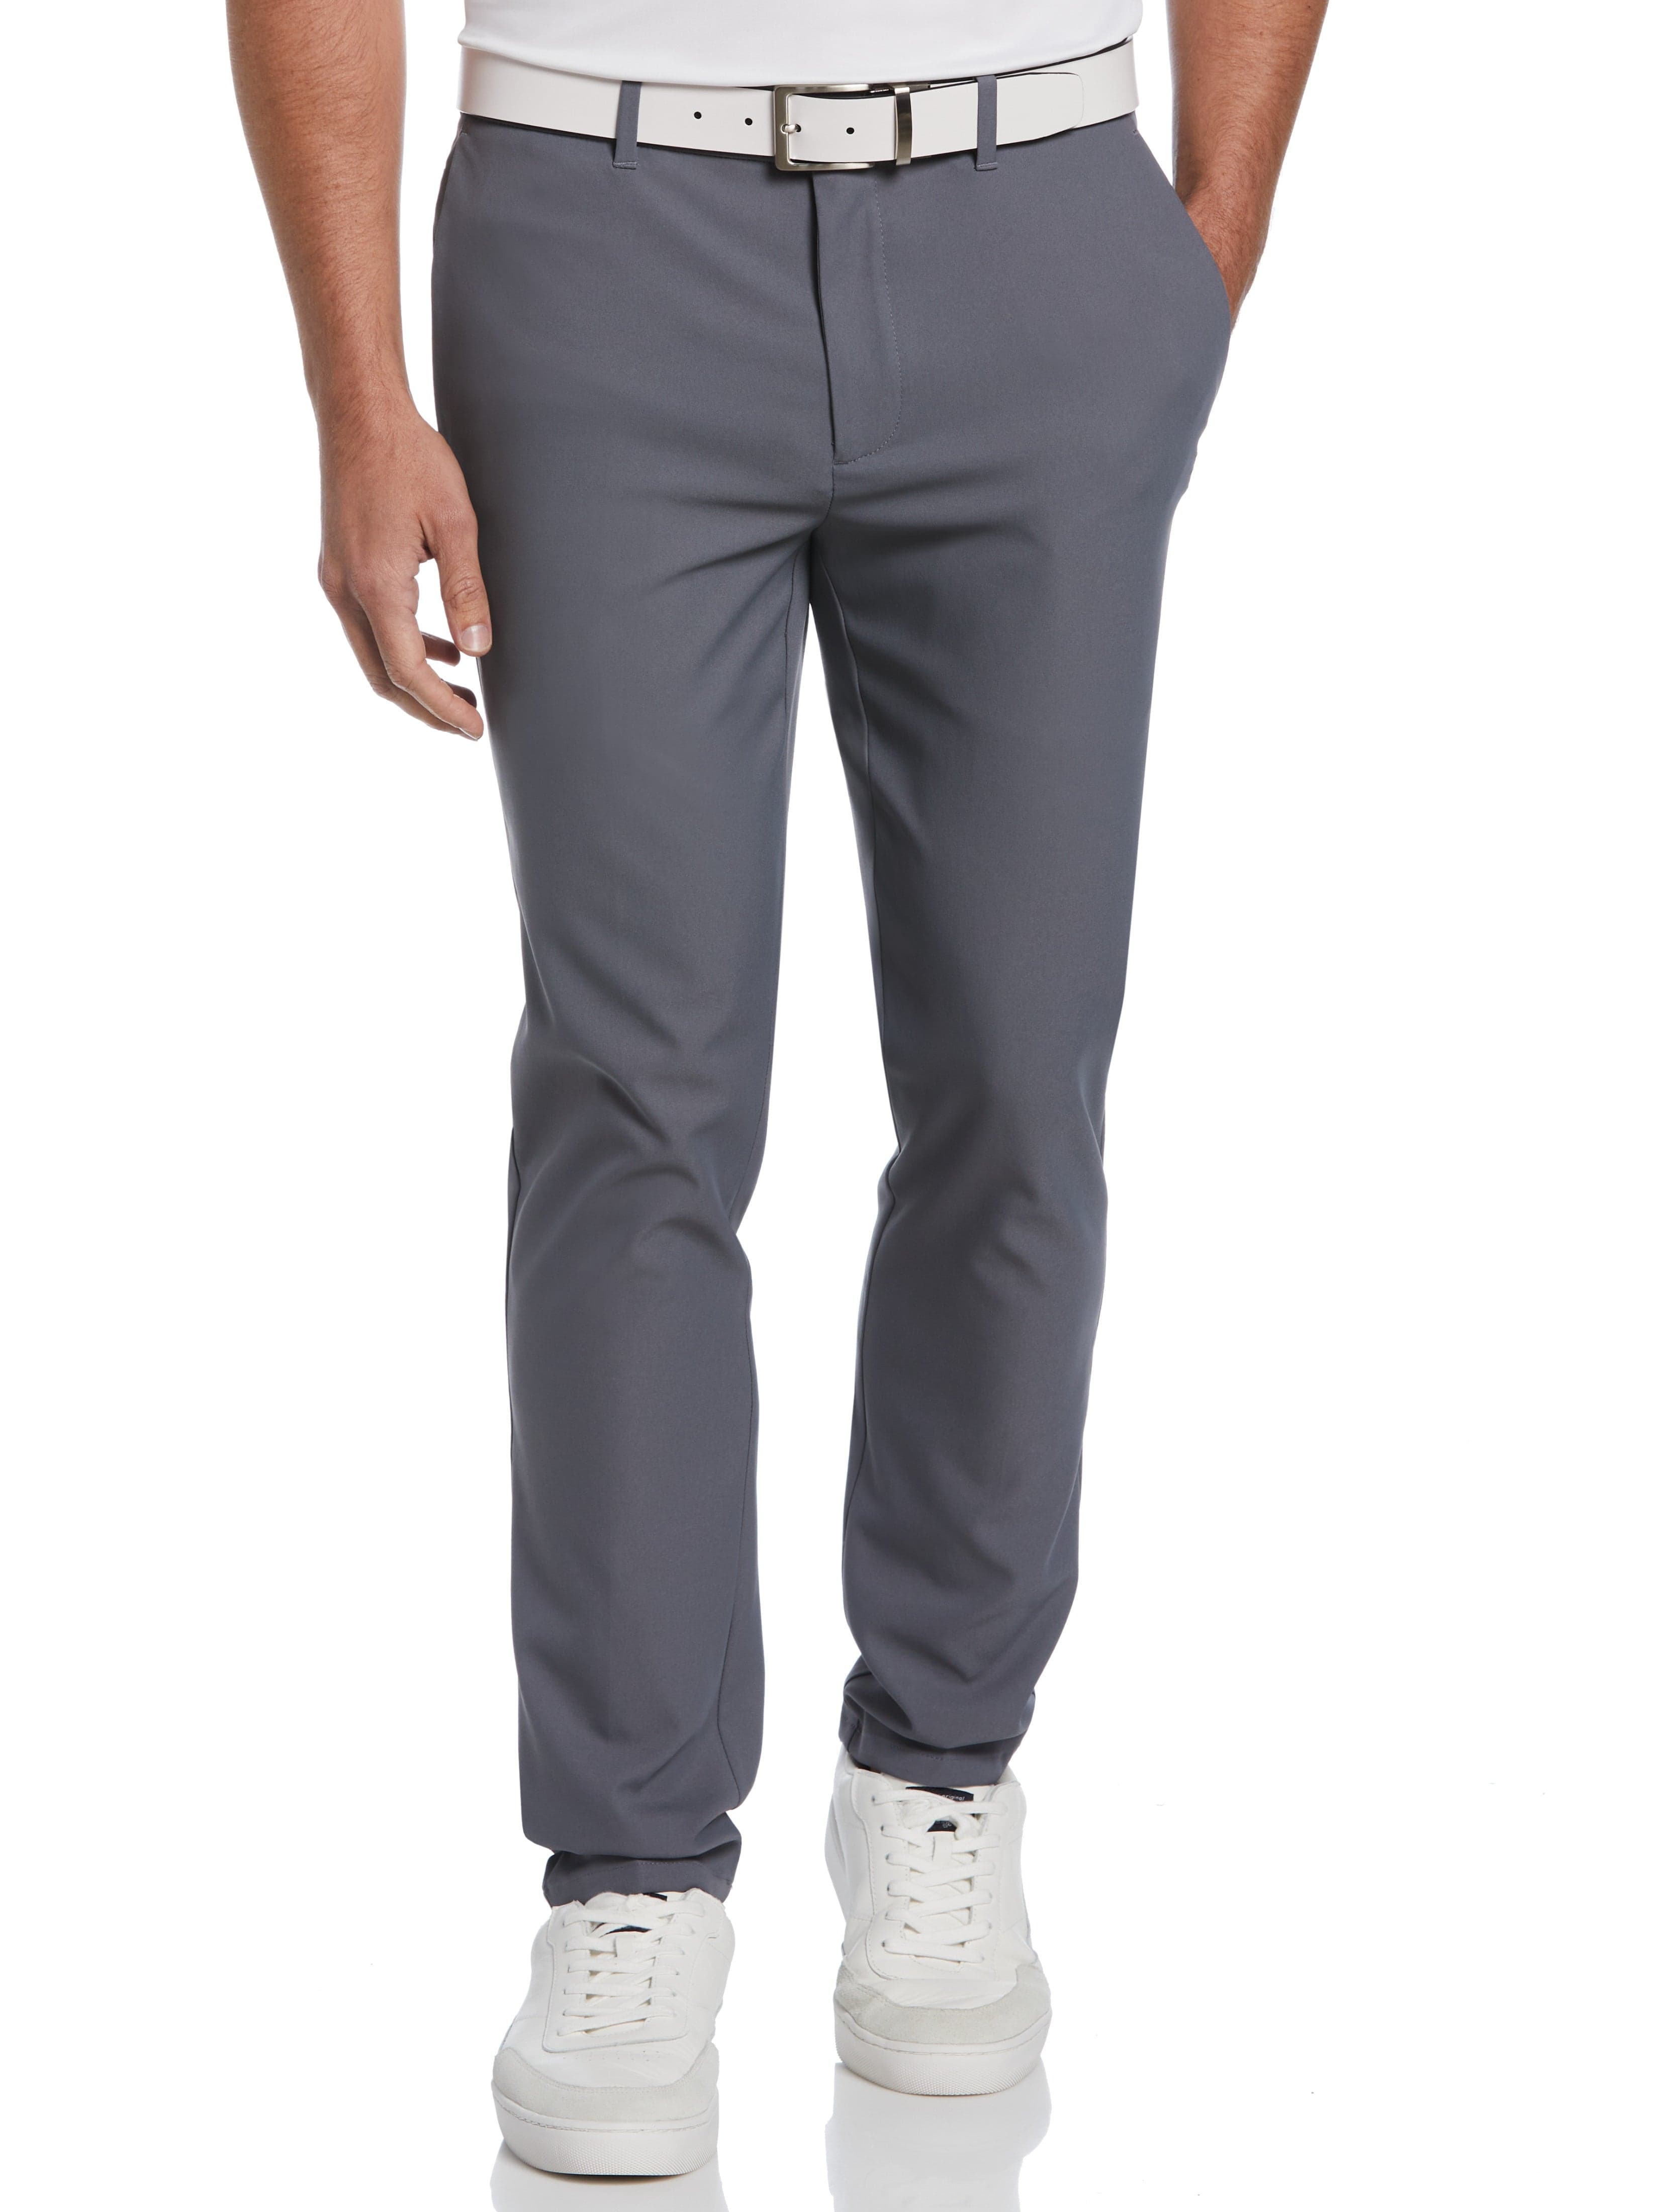 Original Penguin Mens Flat Front Solid Golf Pants, Size 32 x 32, Quiet Shade Gray, 100% Polyester | Golf Apparel Shop